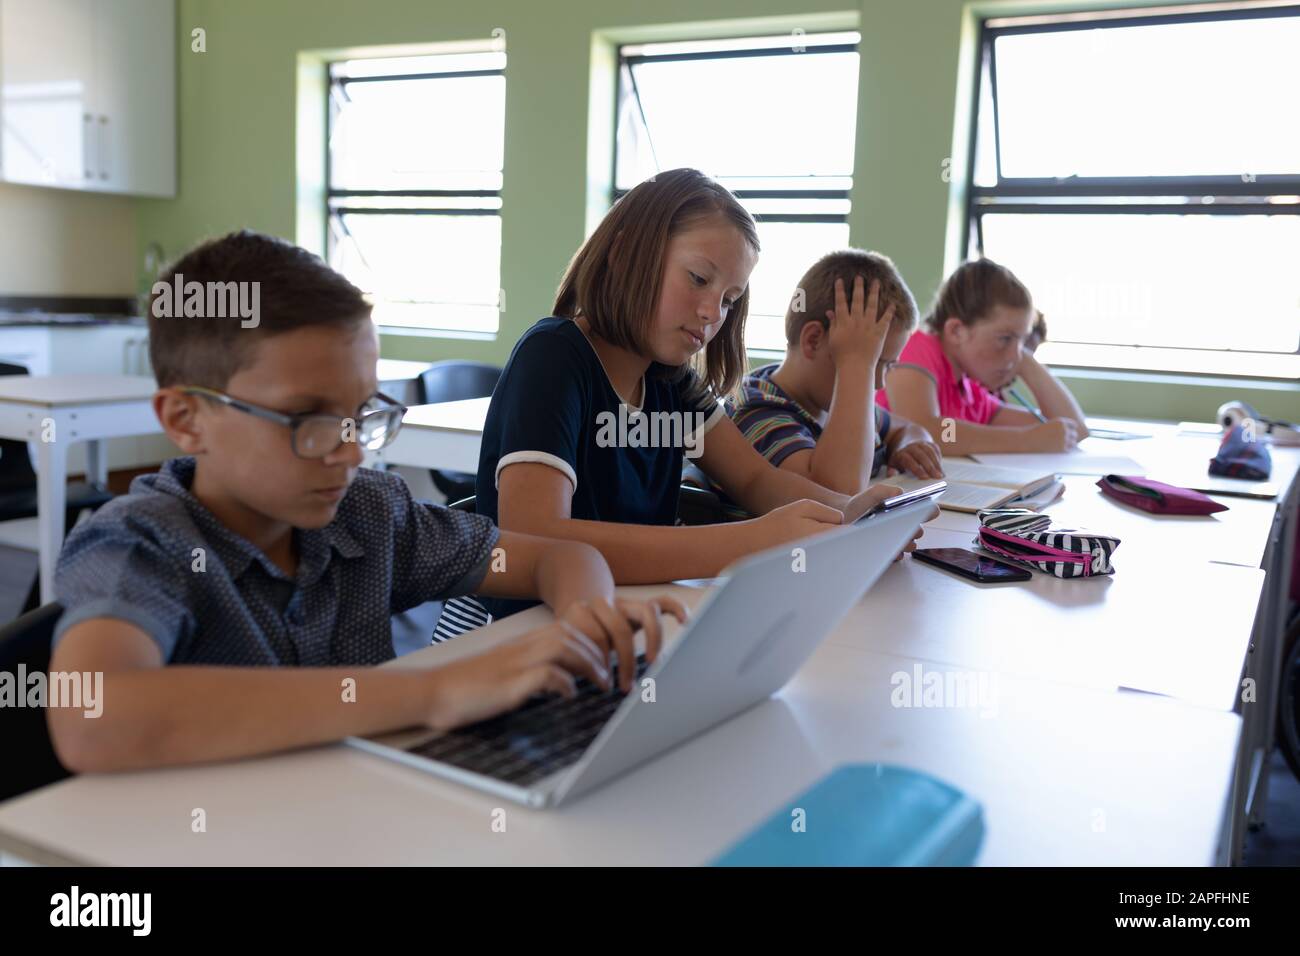 Group of schoolchildren sitting at desks in an elementary school classroom Stock Photo